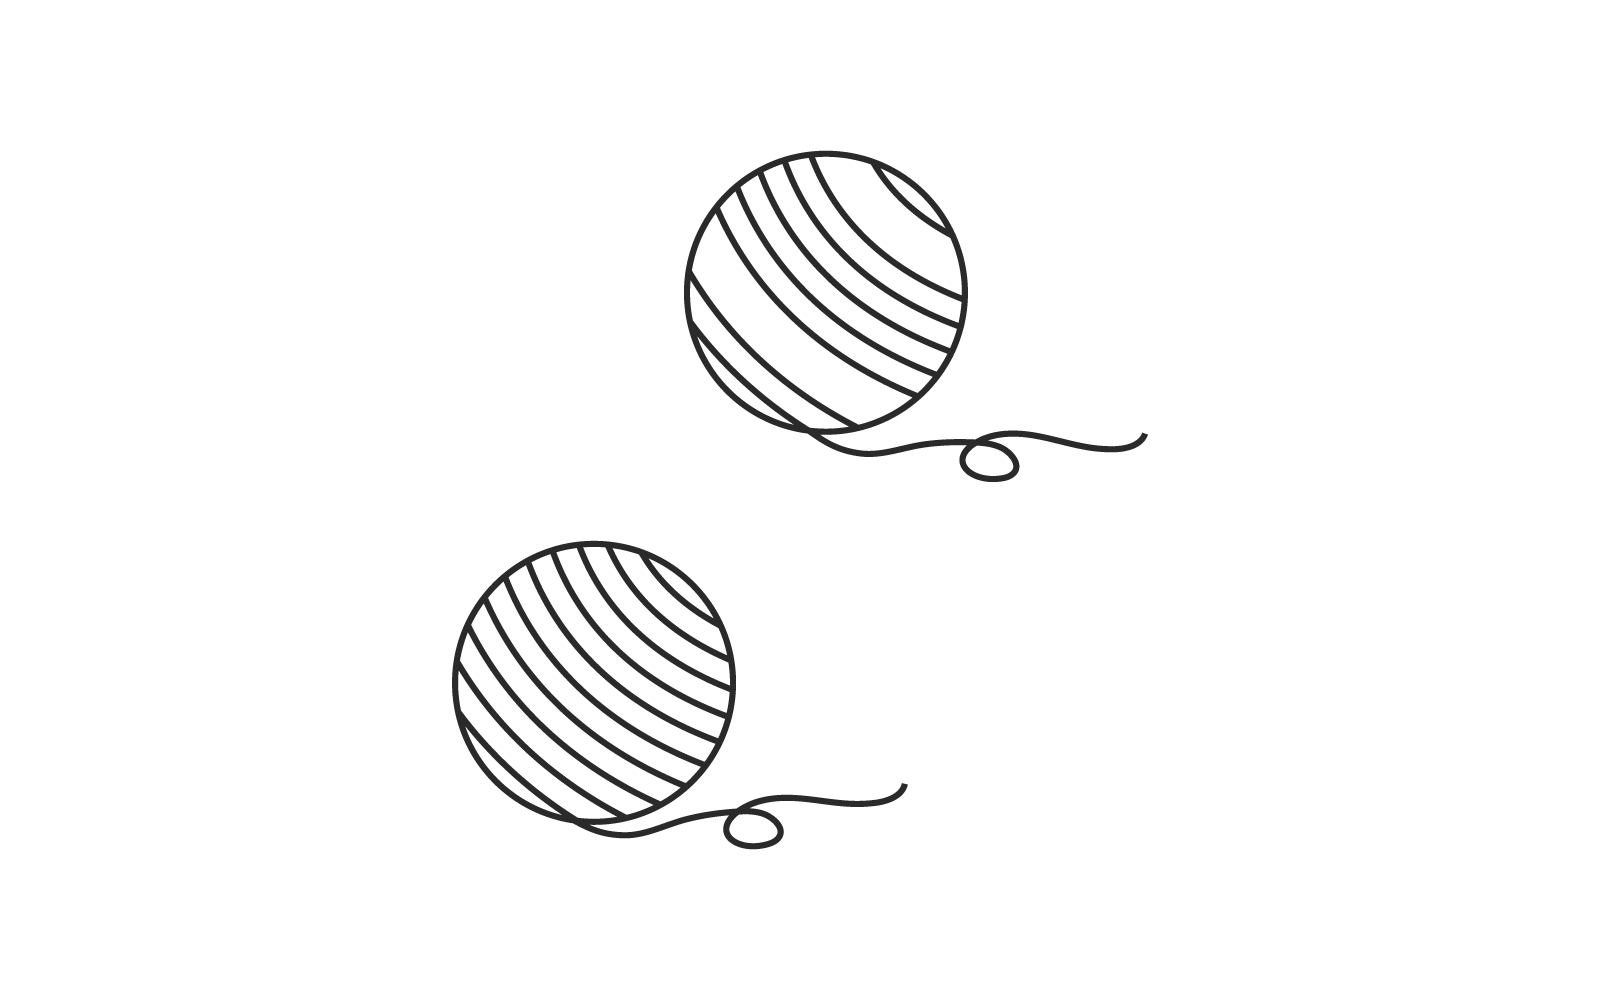 Yarn ball design illustration vector flat design template